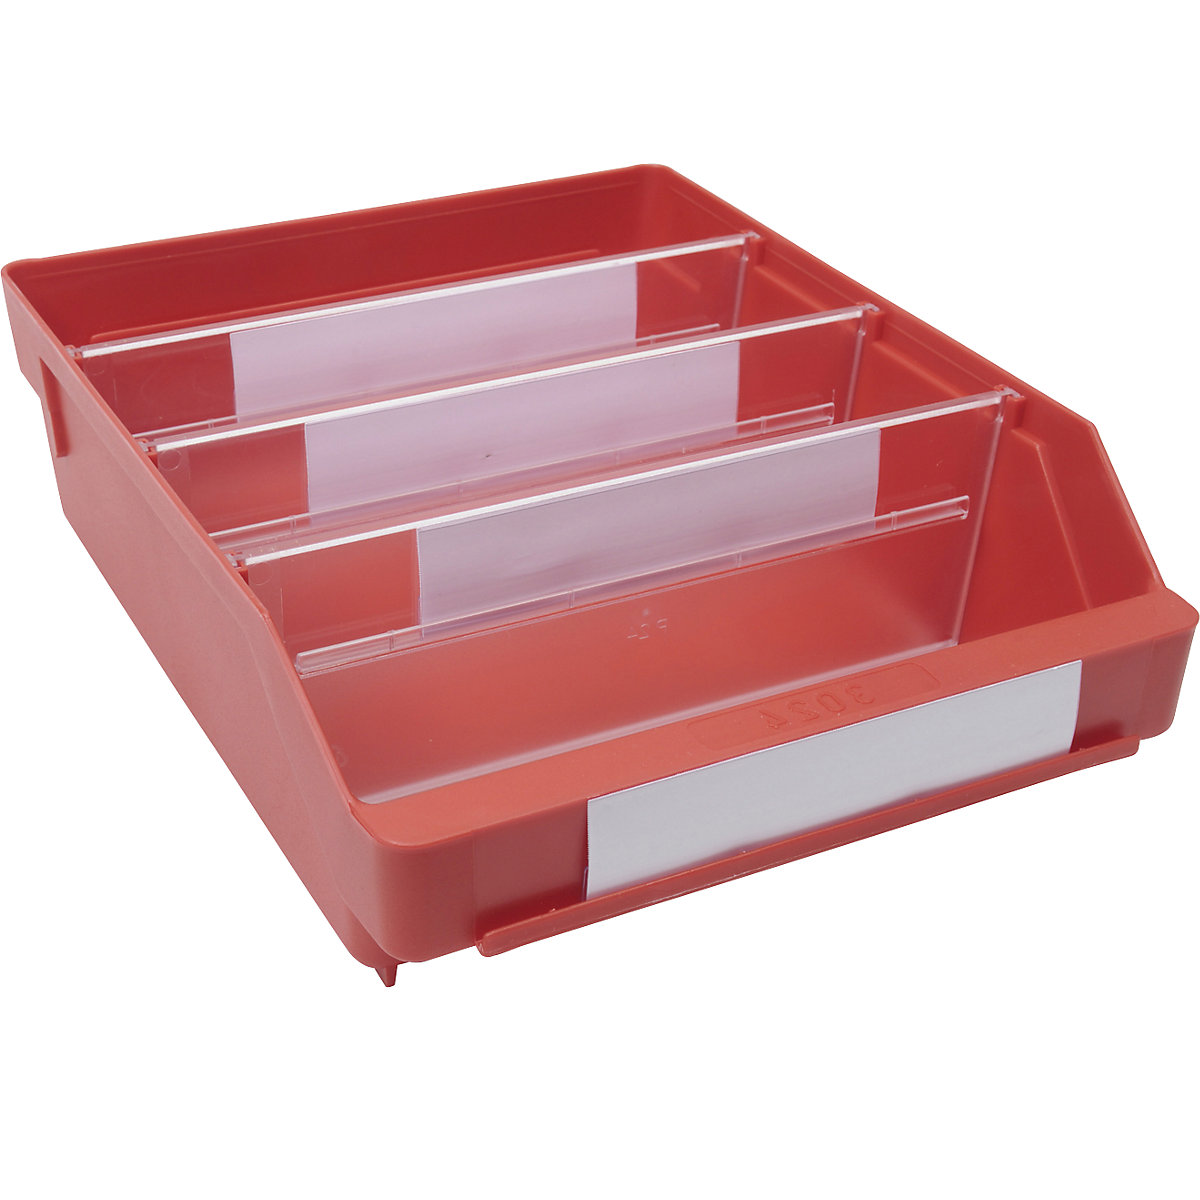 Shelf bin made of highly impact resistant polypropylene - STEMO